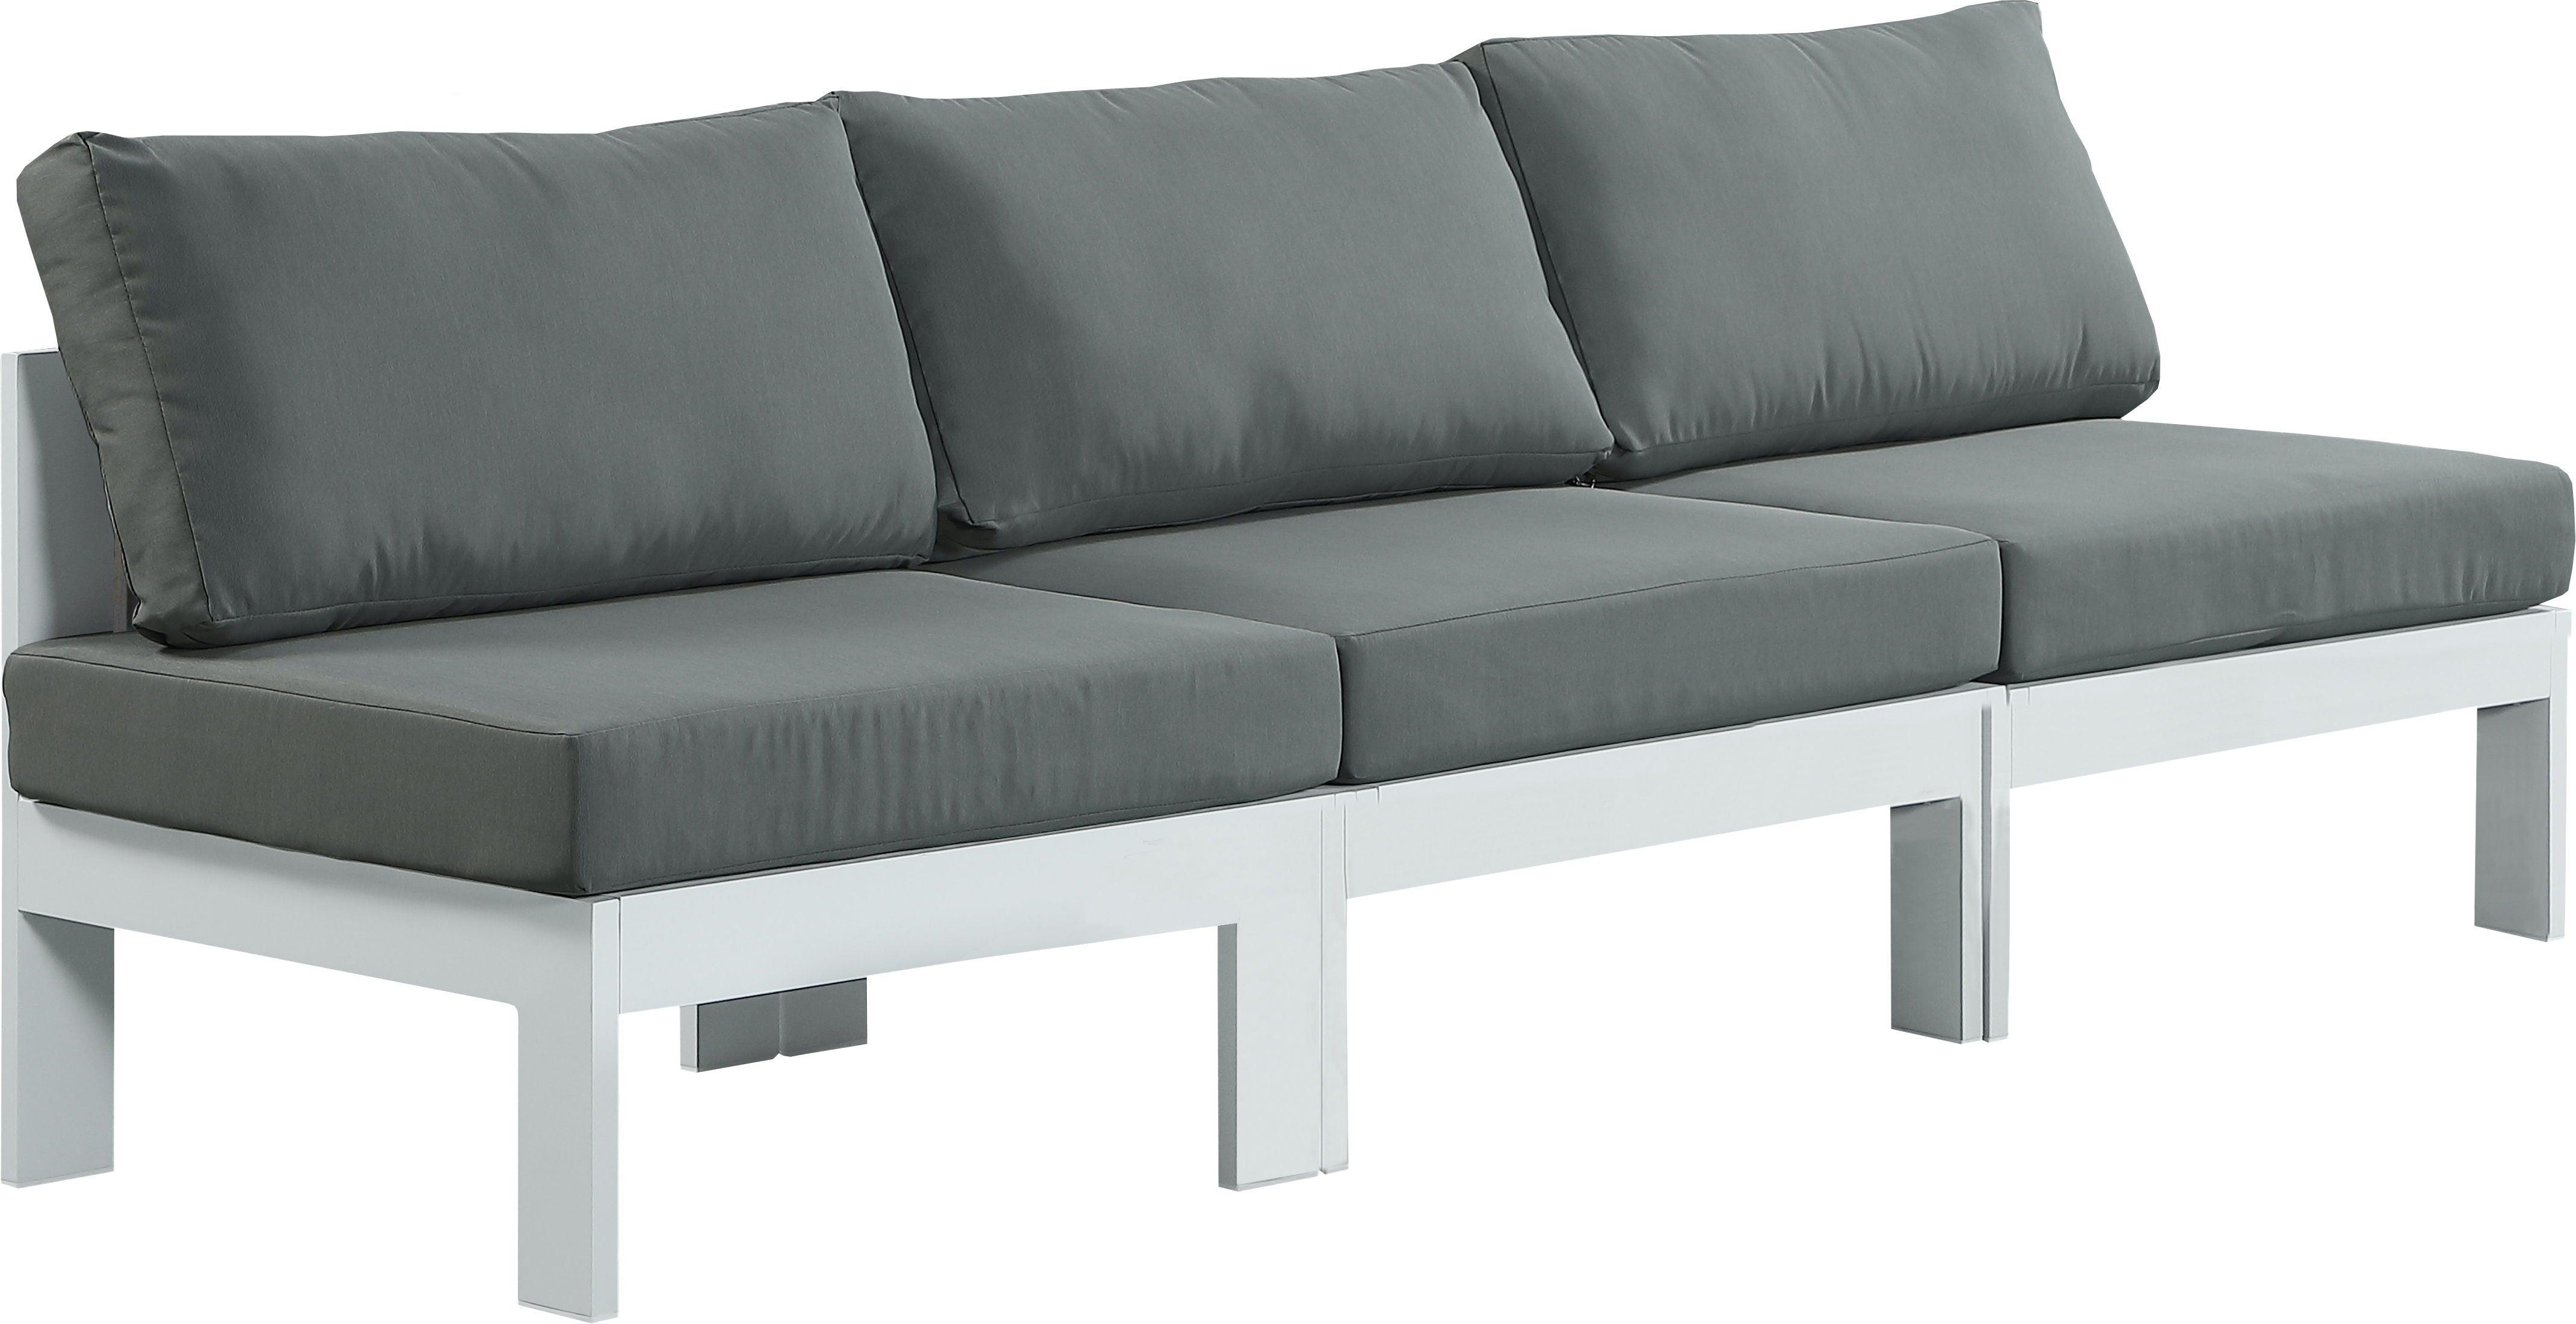 Meridian Furniture - Nizuc - Outdoor Patio Modular Sofa - Grey - Fabric - 5th Avenue Furniture